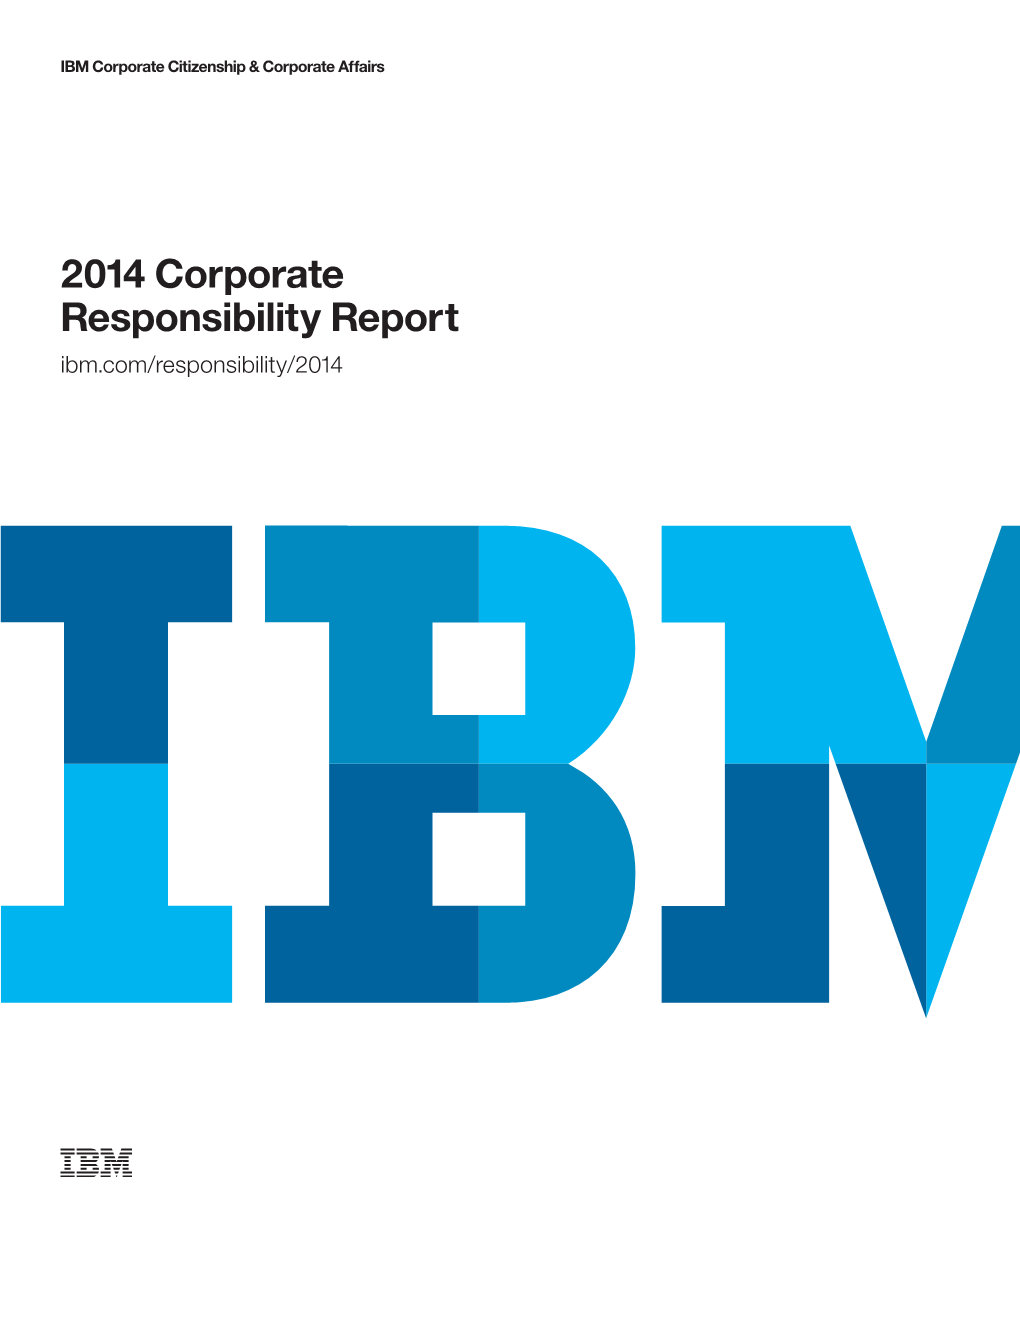 IBM 2014 Corporate Responsibility Report